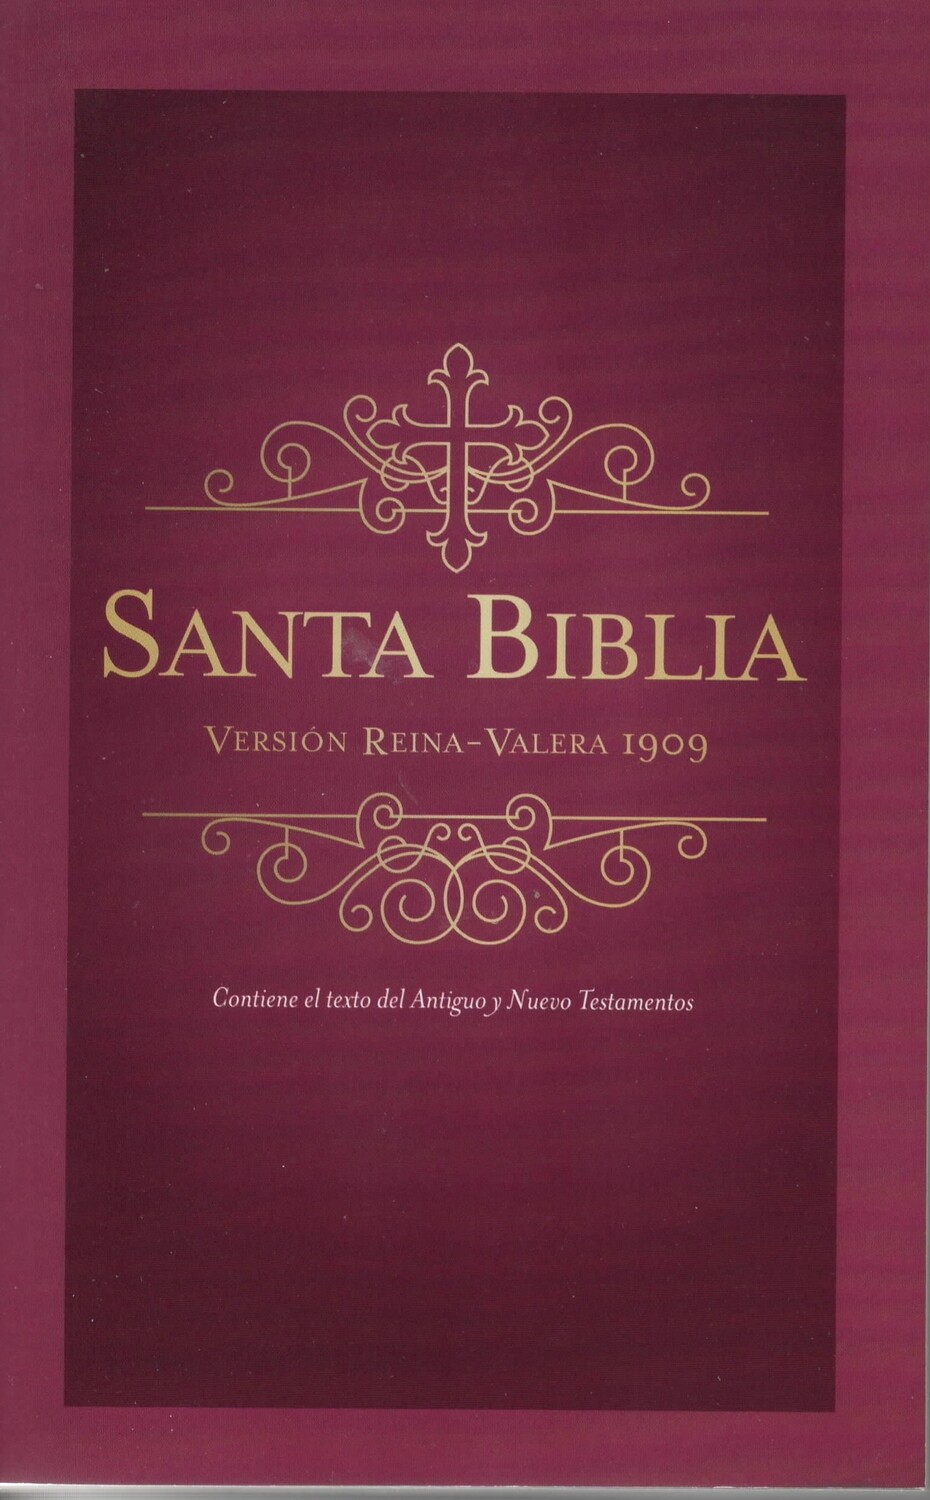 Santa Biblia Version Reina-Valera 1909